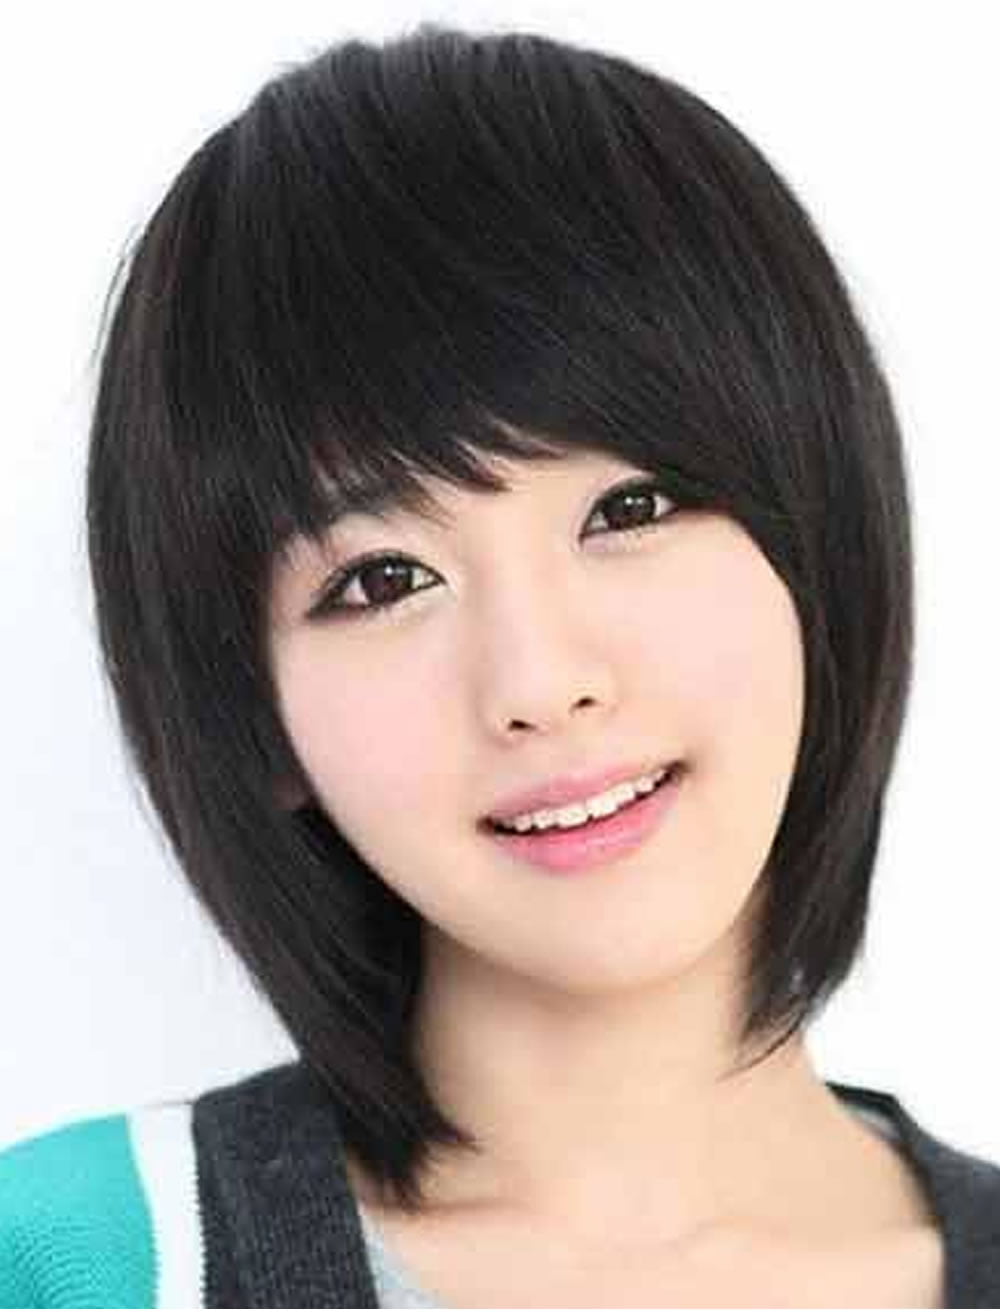 Asian woman with a textured bob haircut